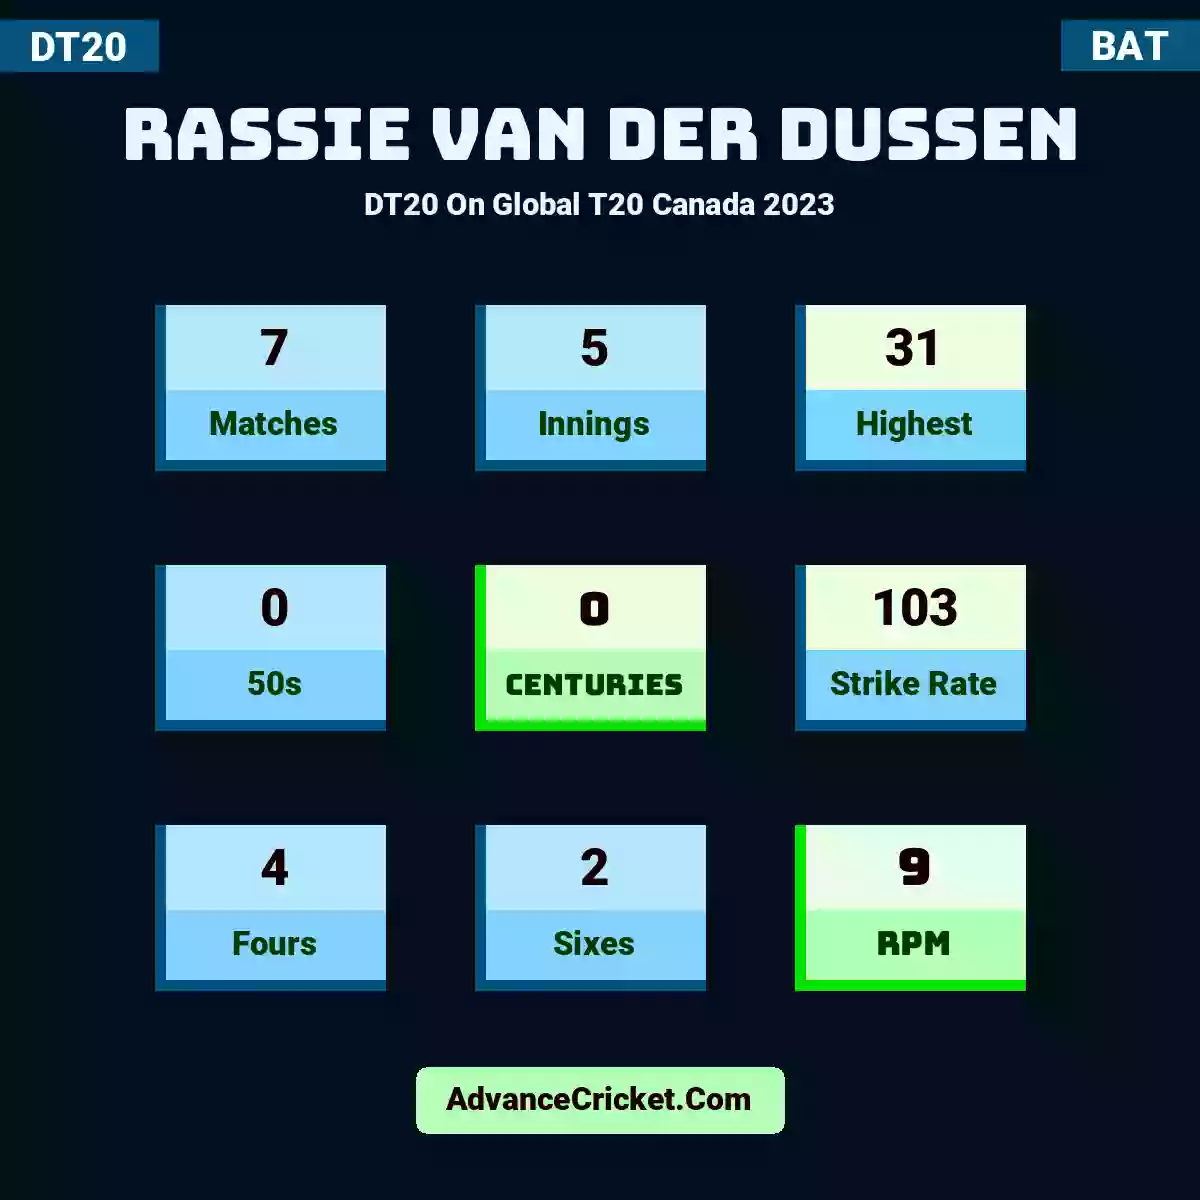 Rassie van der Dussen DT20  On Global T20 Canada 2023, Rassie van der Dussen played 7 matches, scored 31 runs as highest, 0 half-centuries, and 0 centuries, with a strike rate of 103. R.Dussen hit 4 fours and 2 sixes, with an RPM of 9.